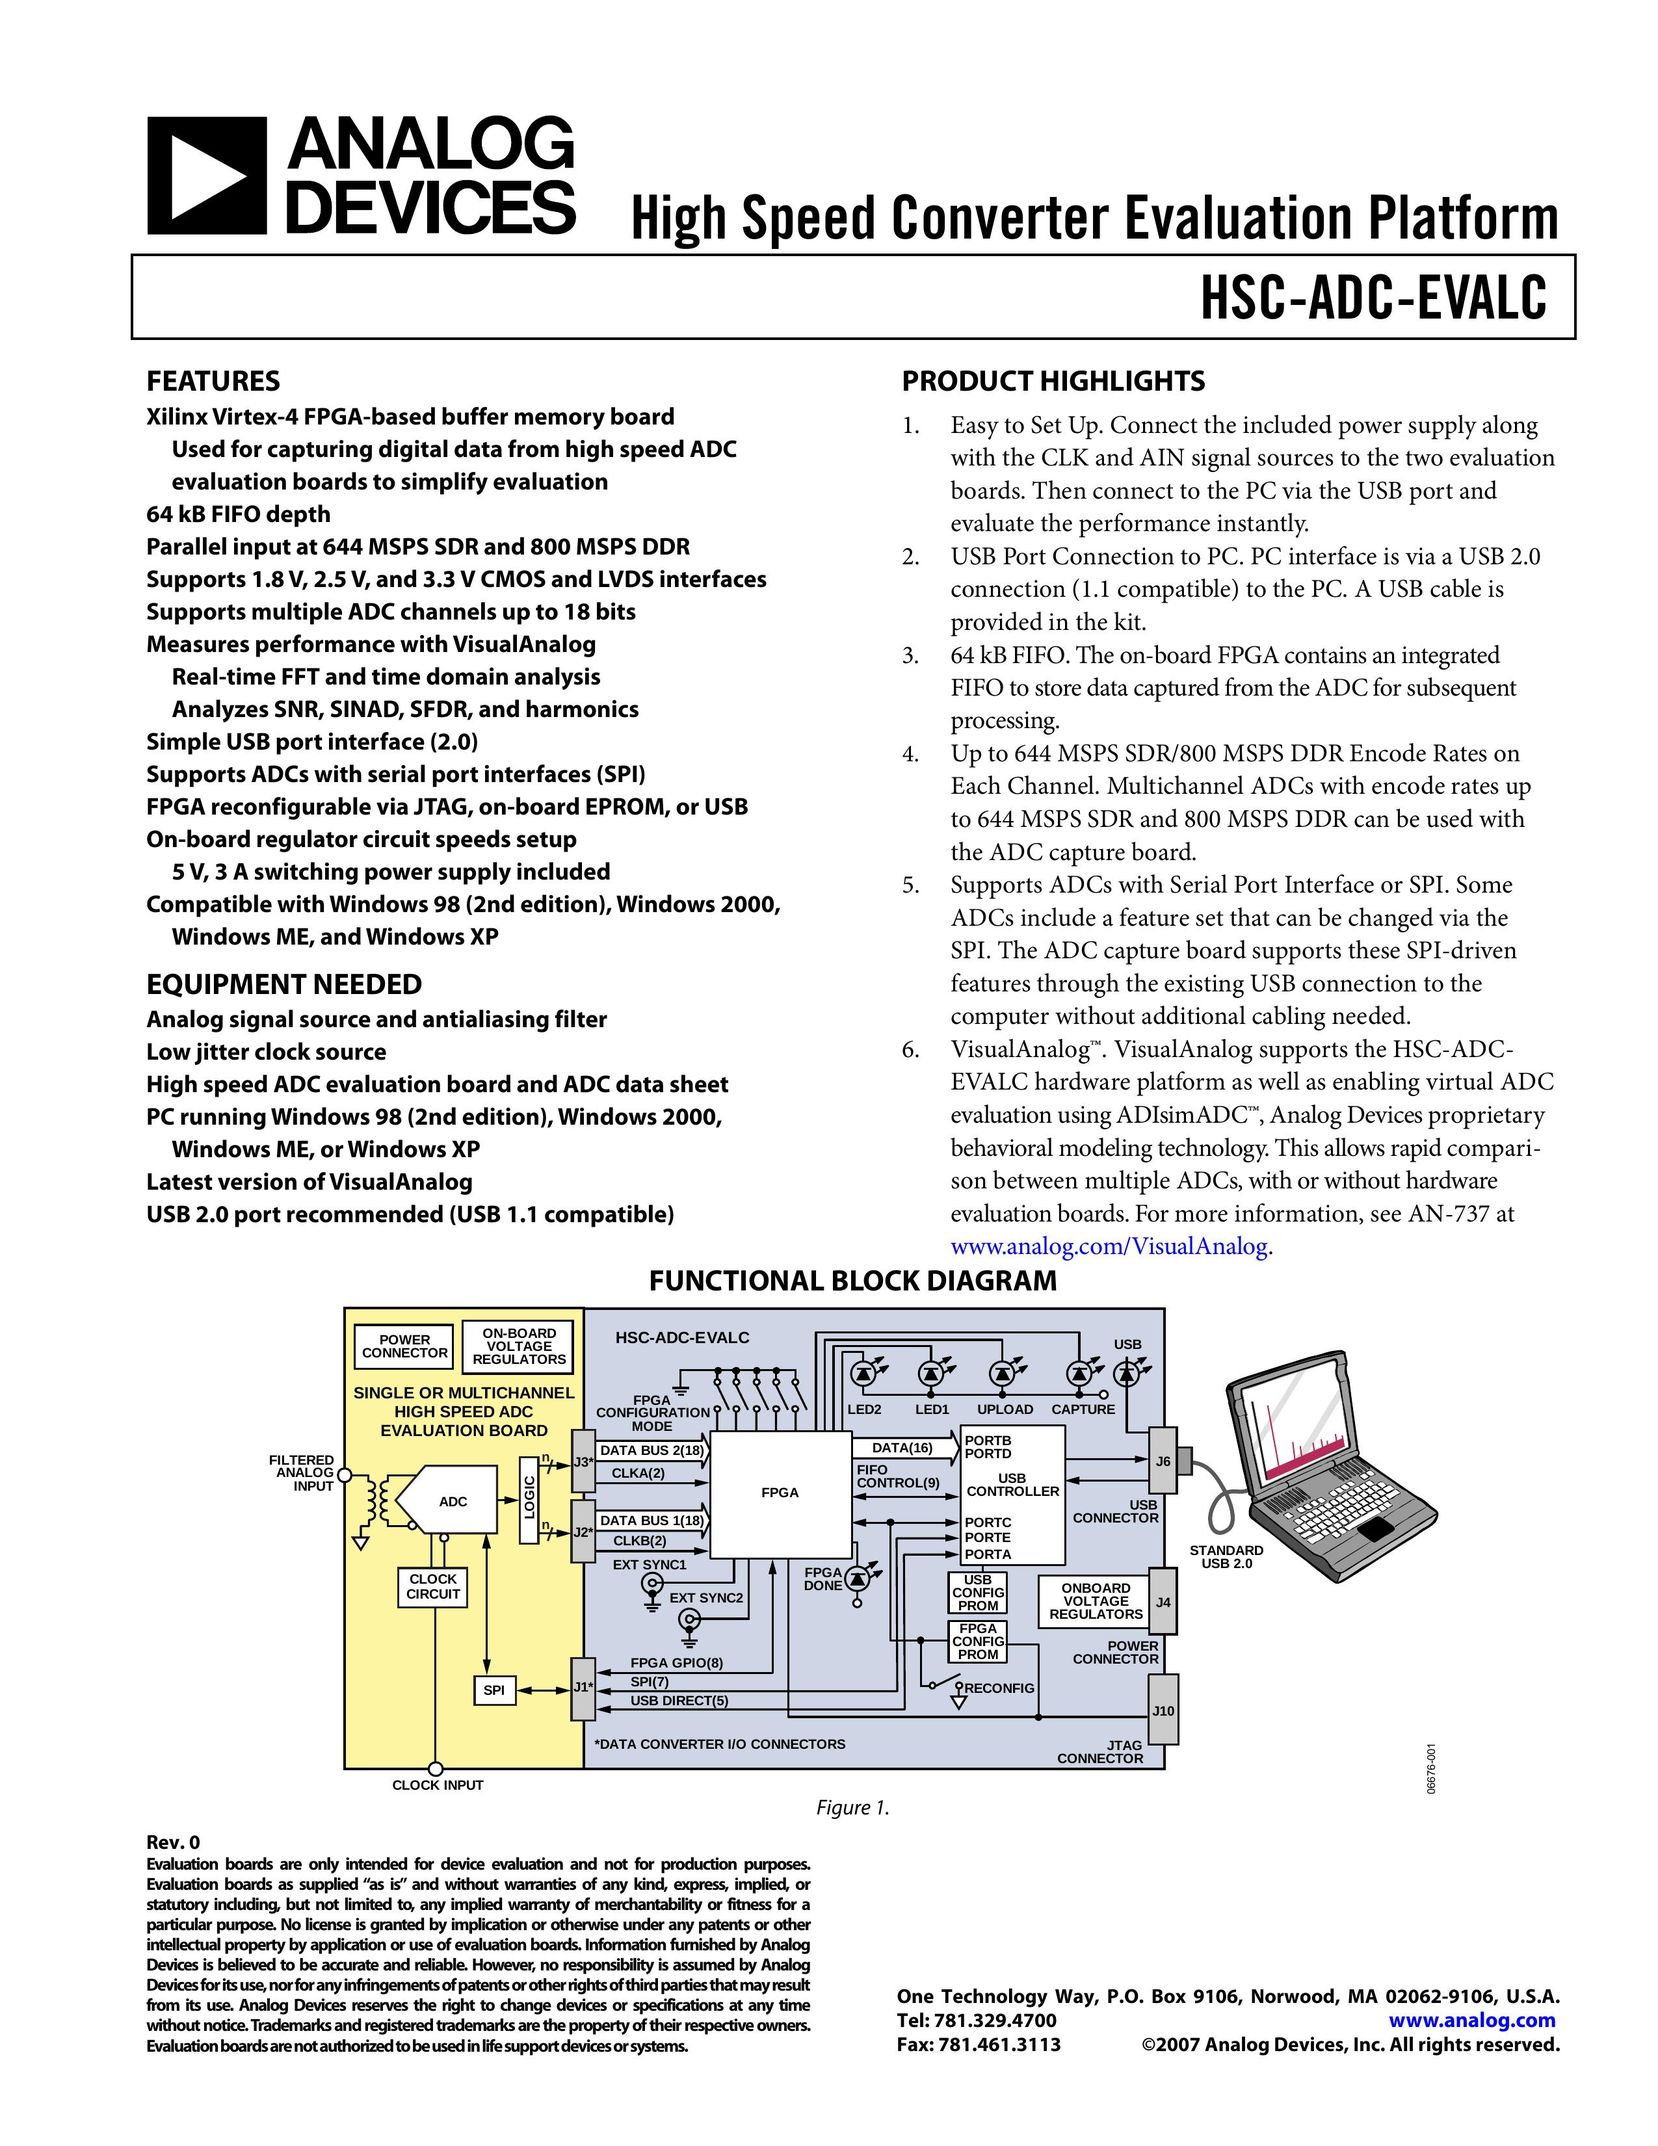 Analog Devices HSC-ADC-EVALC TV Converter Box User Manual